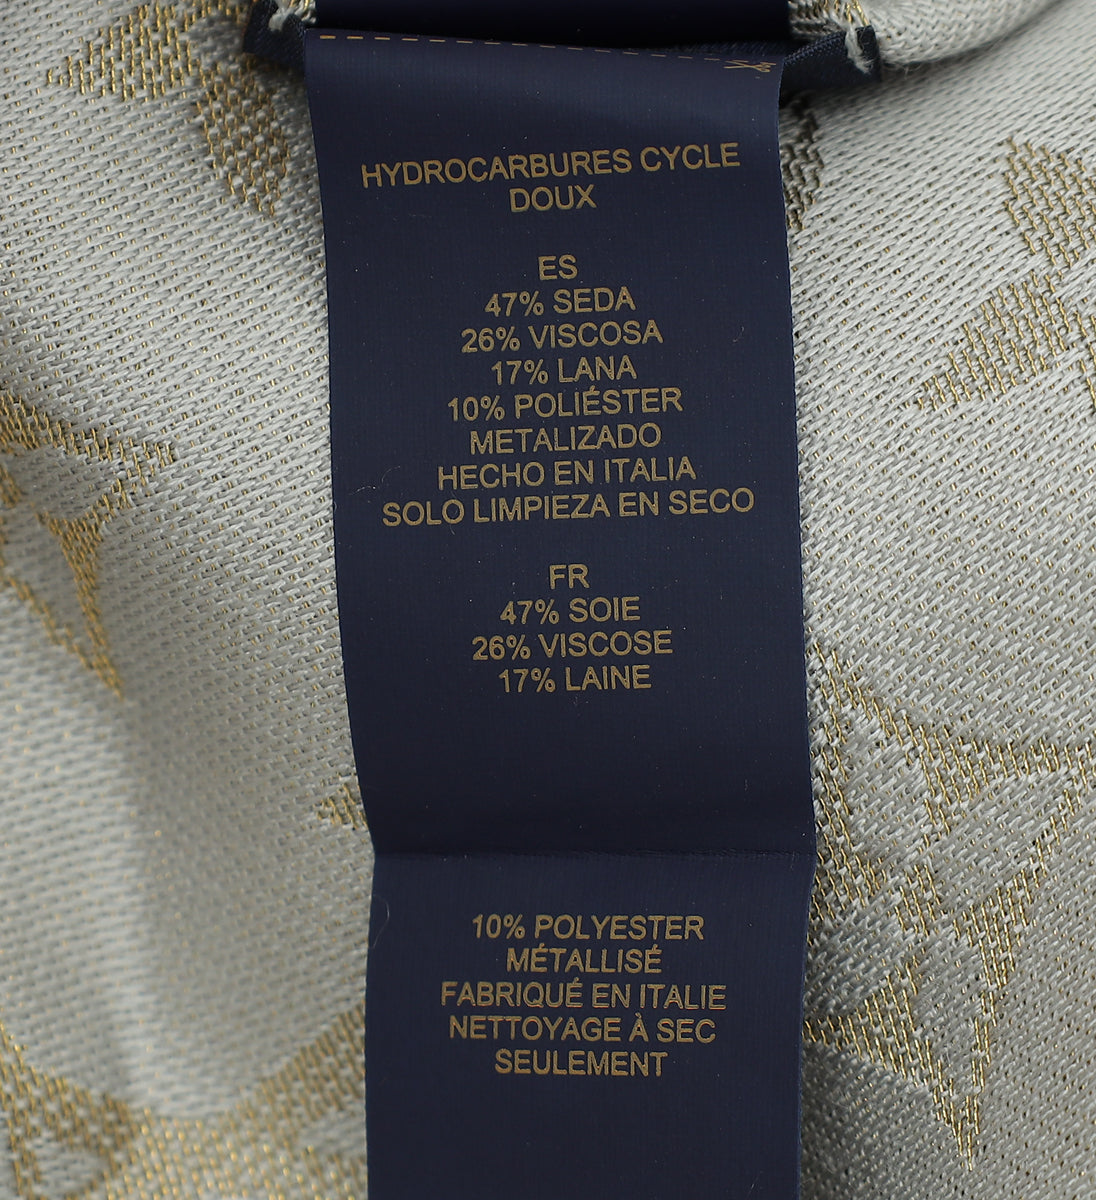 Louis Vuitton Metallic Greige Monogram Shine Shawl, 2020 Available